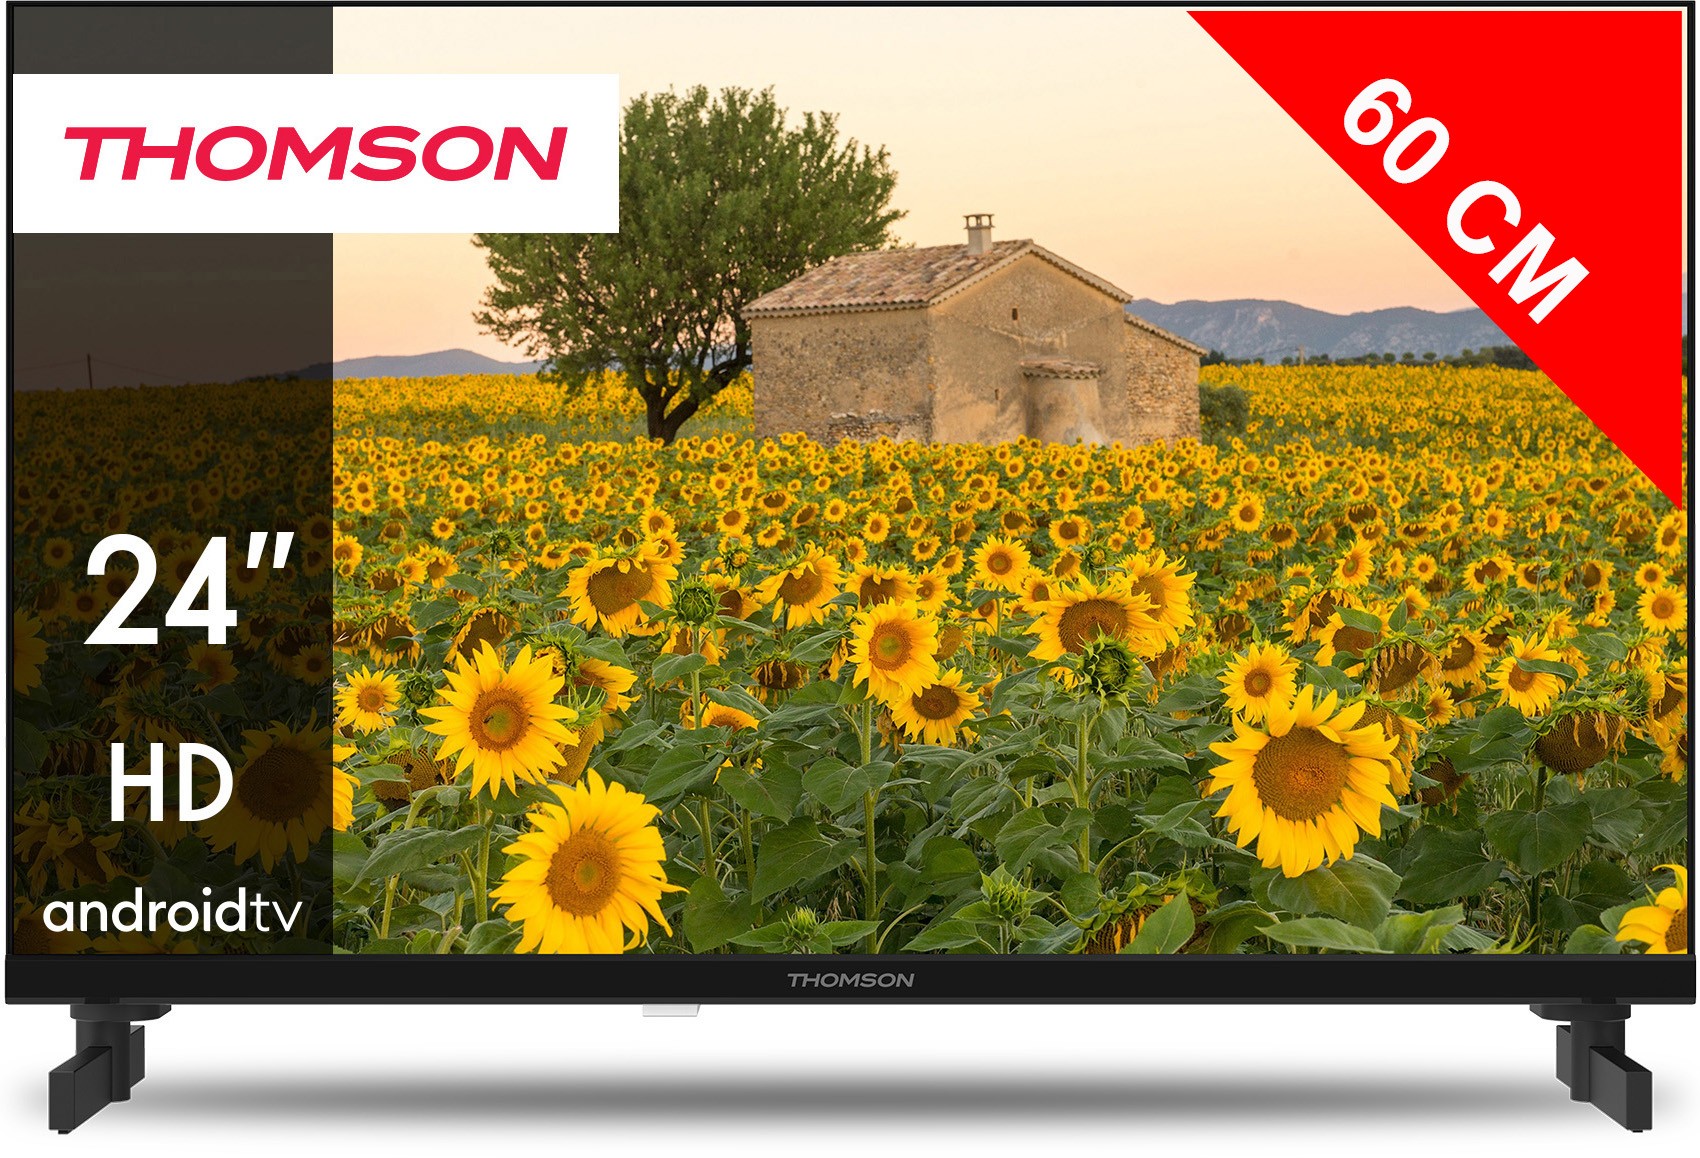 THOMSON TV LED 60 cm 60 Hz Android TV 24"  24HA2S13C